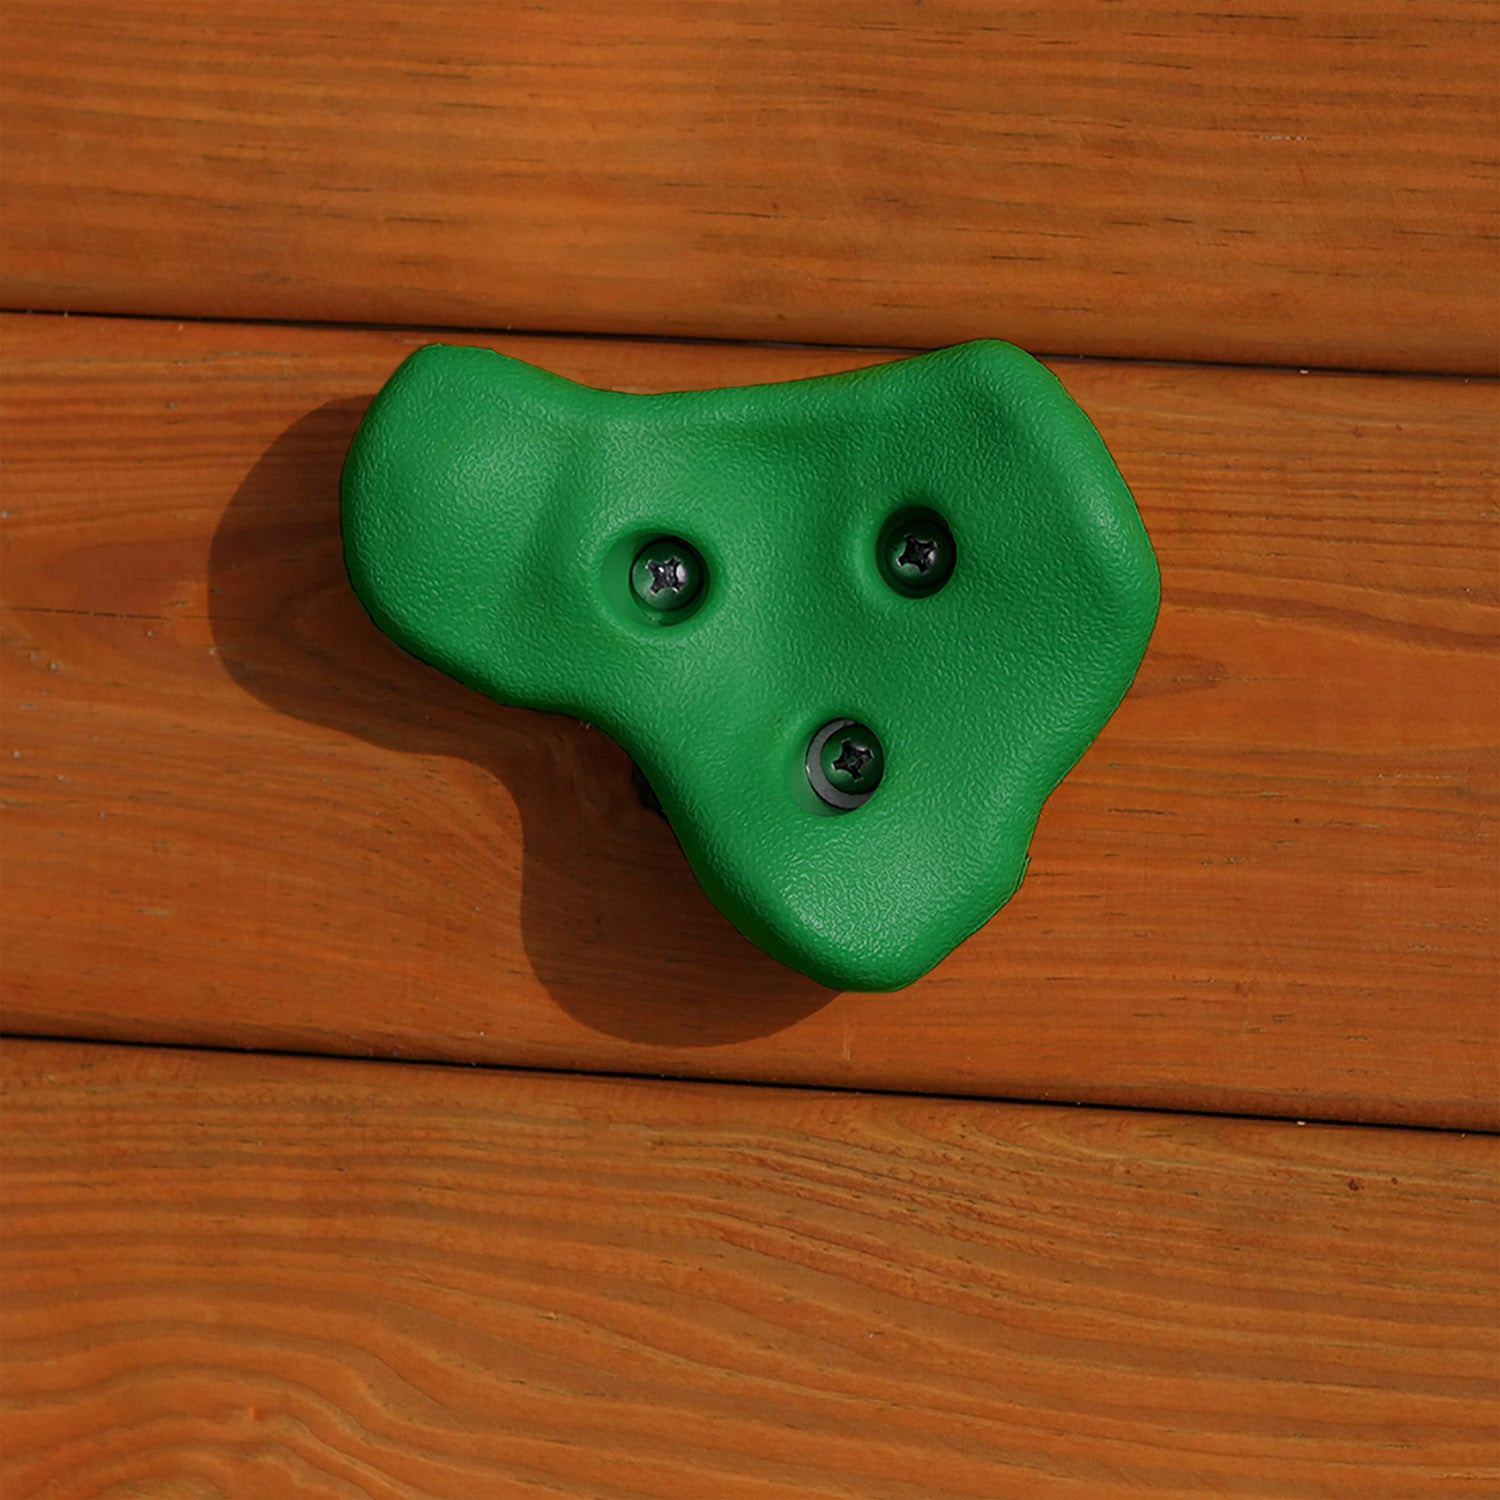 Gorilla Playsets Green Rubber Mat at